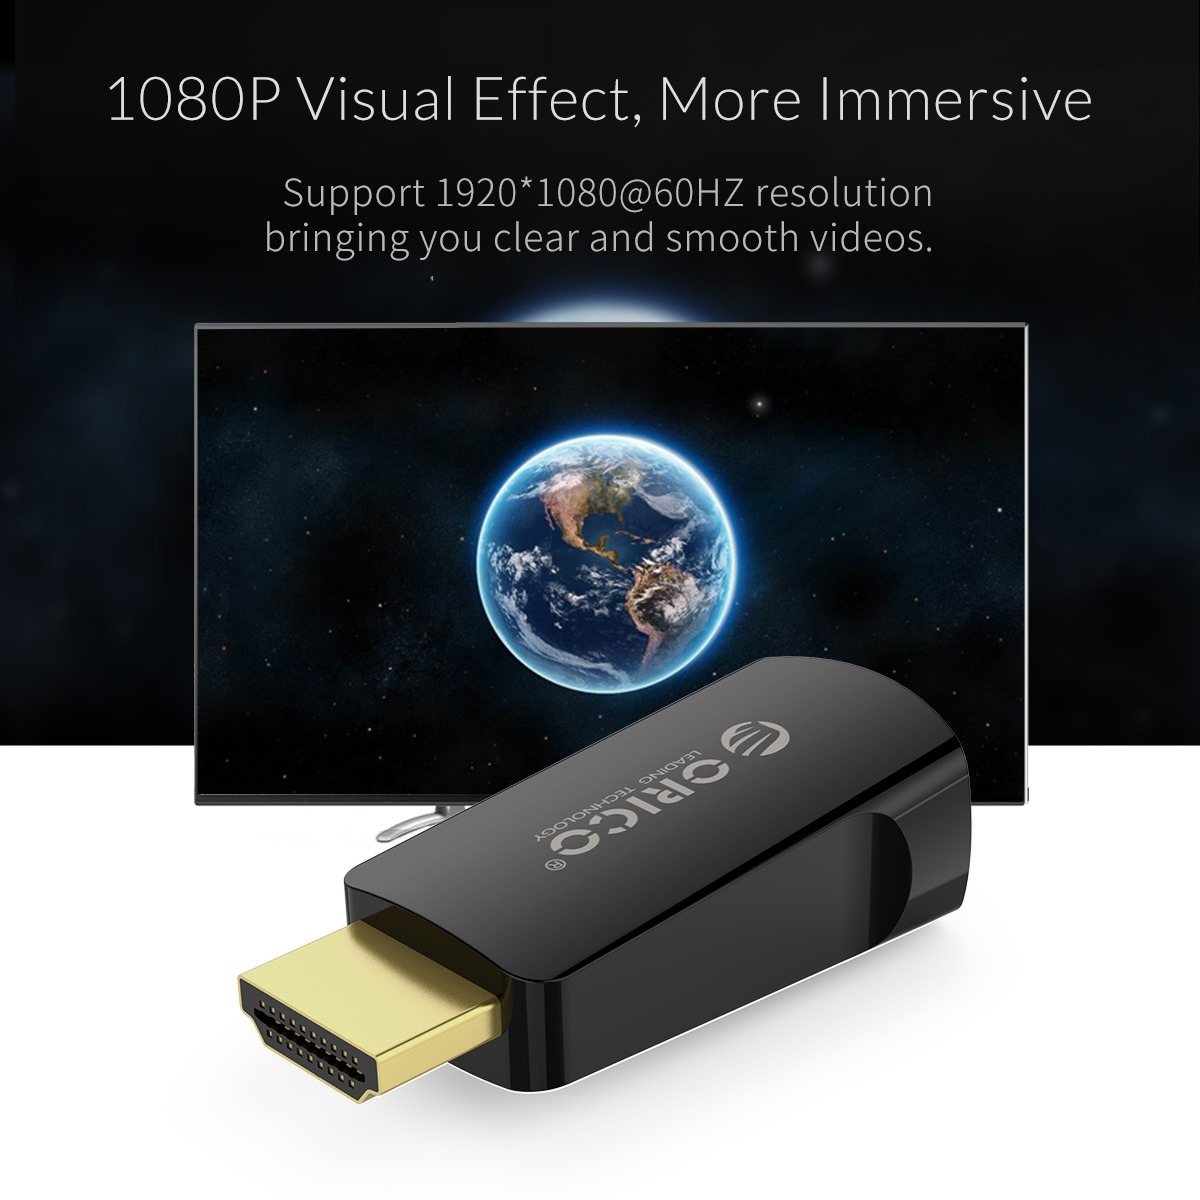 ORICO XD-HLFV HDMI to VGA (M to F) Audio & Video Convertor